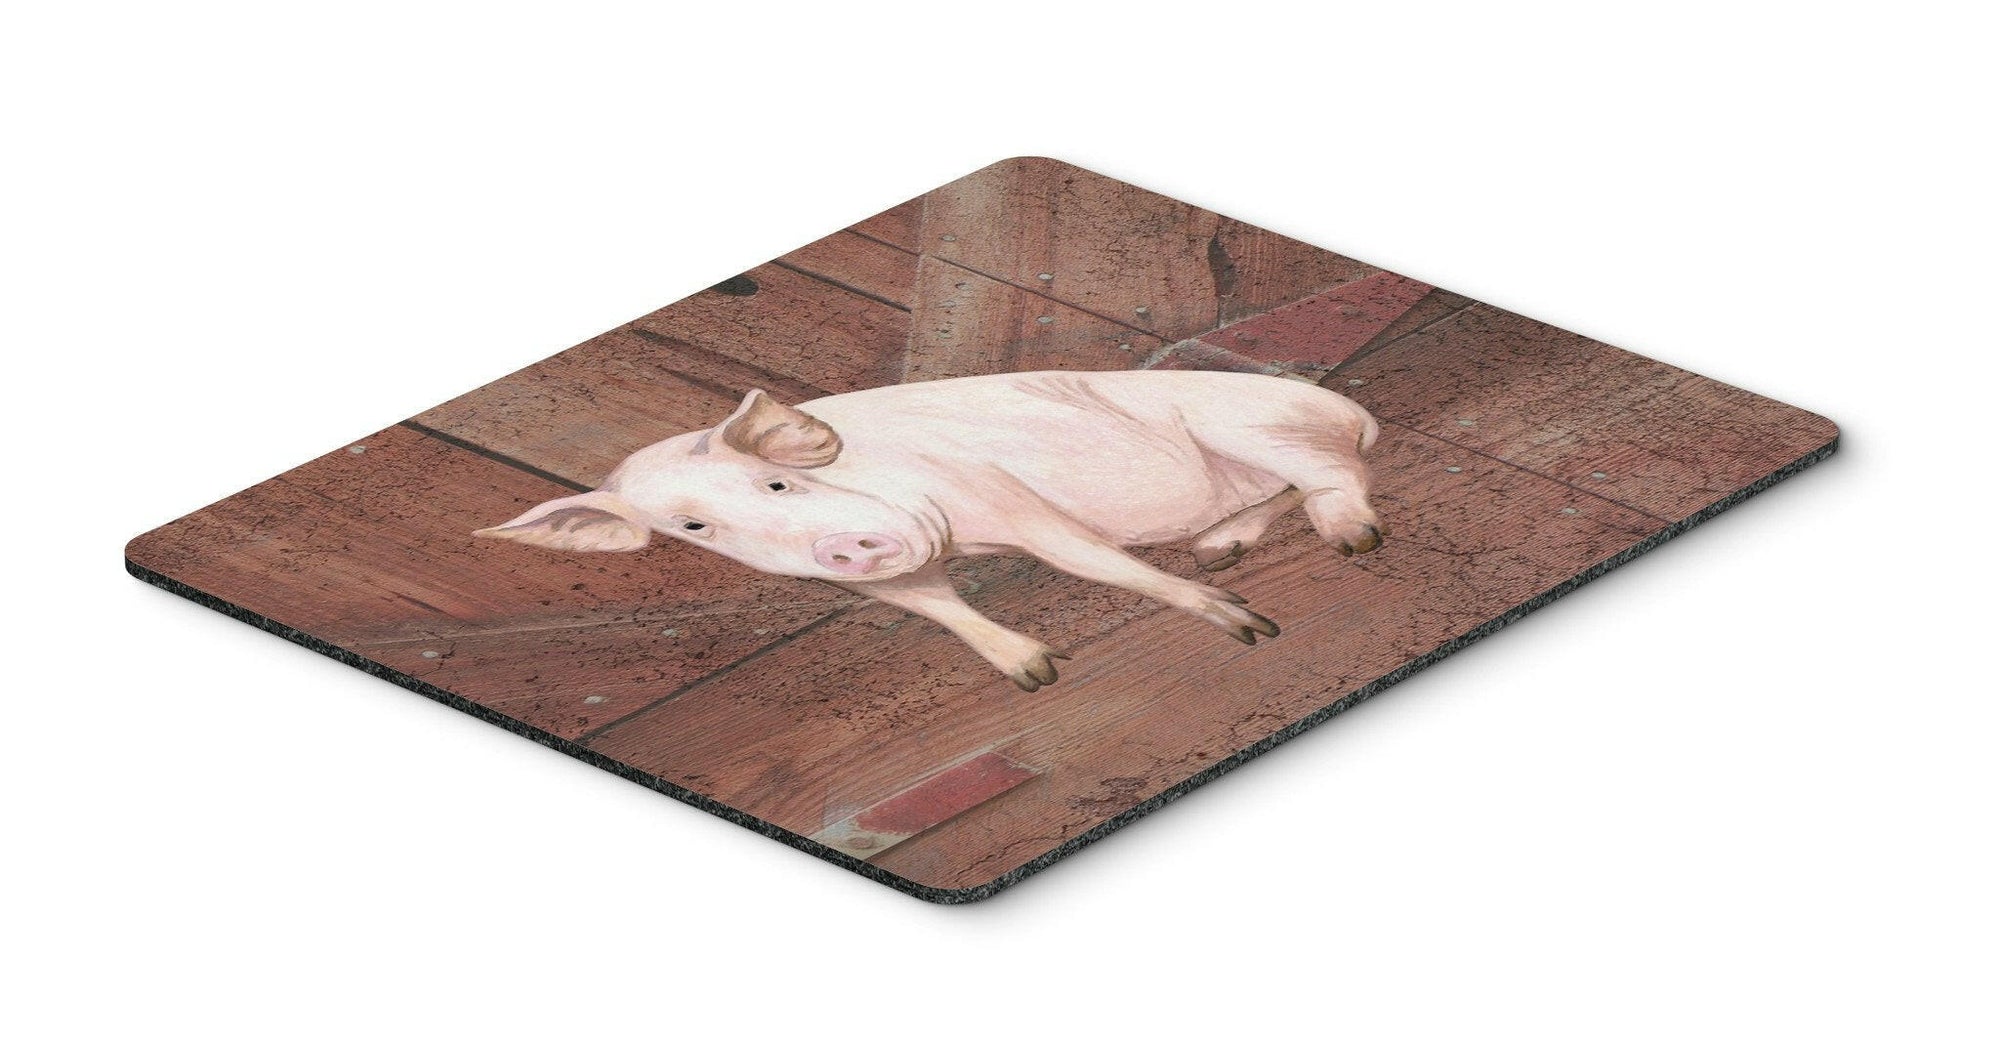 Pig at the barn door Mouse Pad, Hot Pad or Trivet SB3072MP by Caroline's Treasures